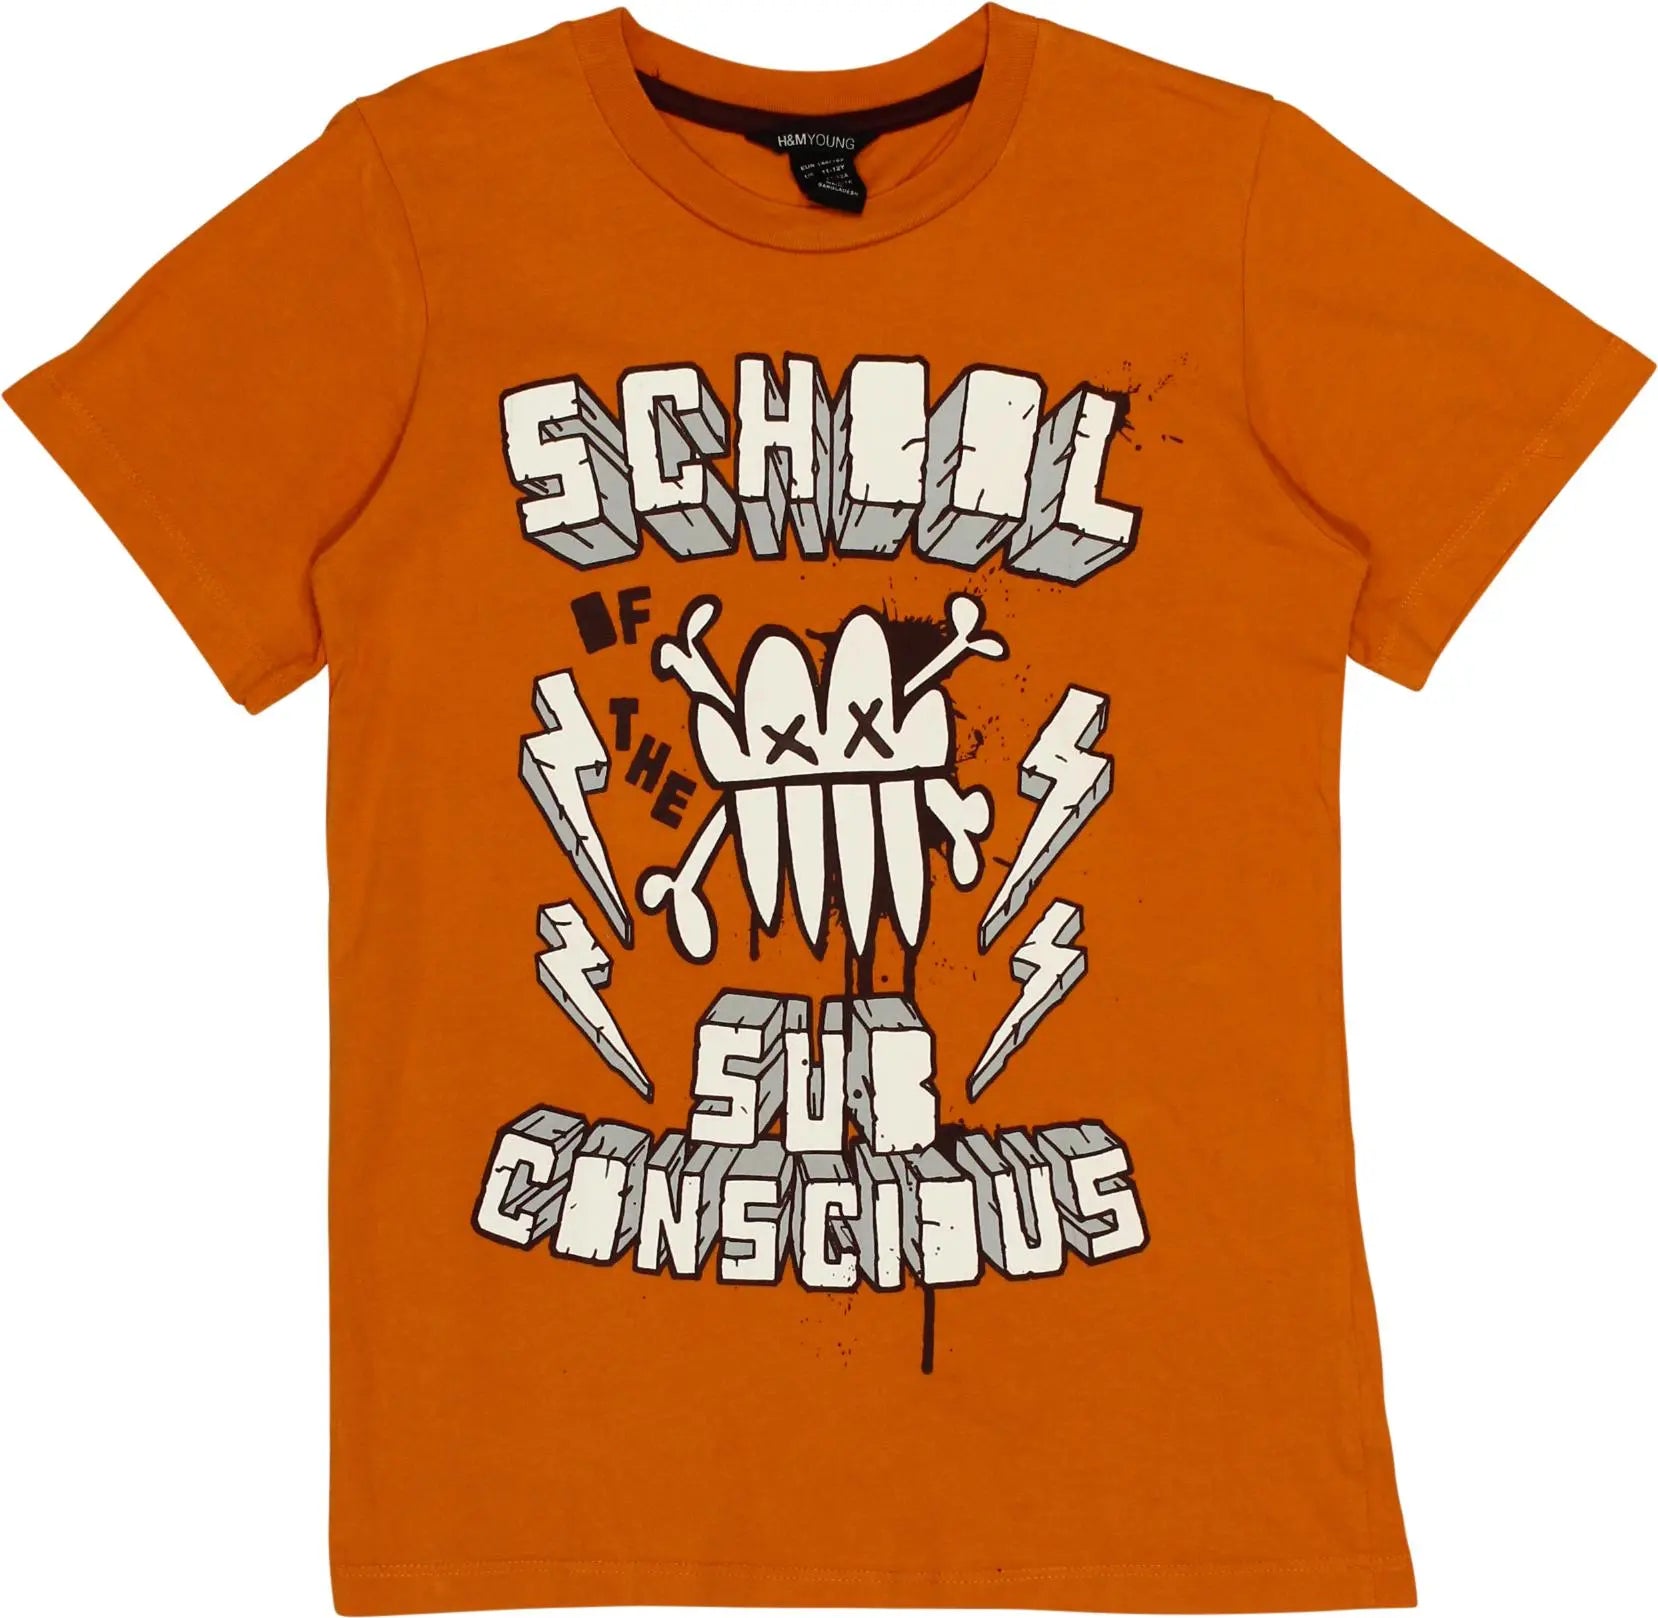 H&M - Orange T-shirt- ThriftTale.com - Vintage and second handclothing